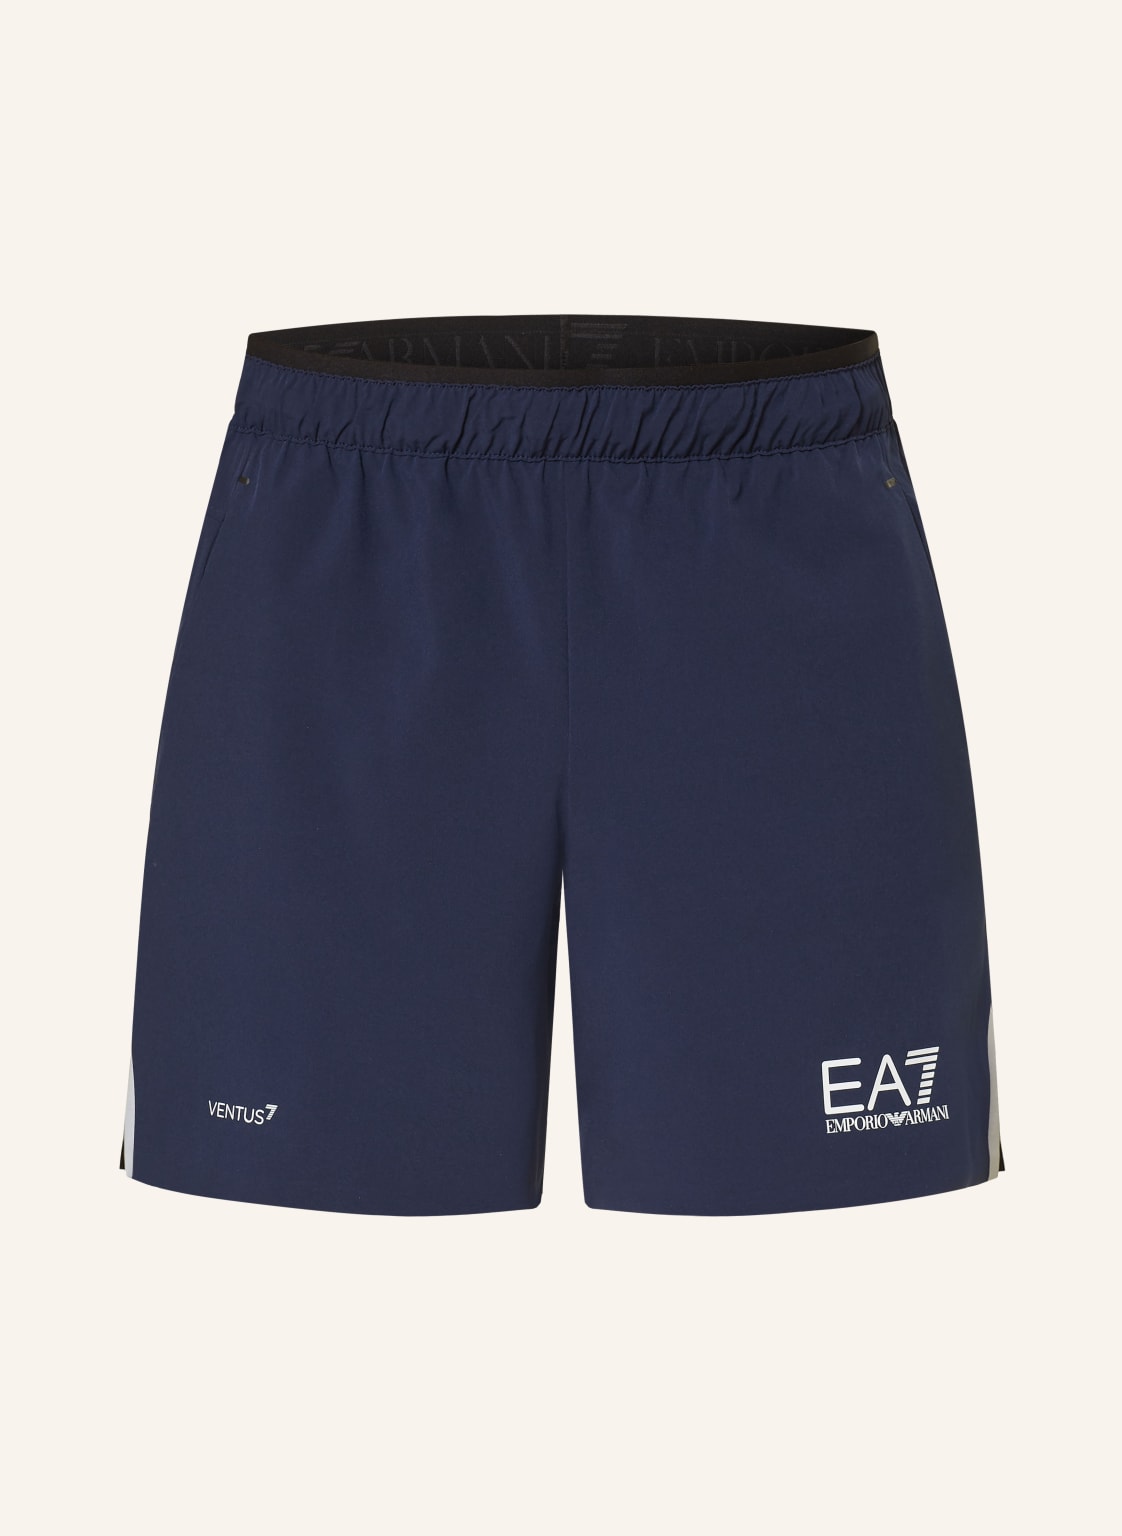 ea7 Emporio Armani Tennisshorts blau von EA7 EMPORIO ARMANI